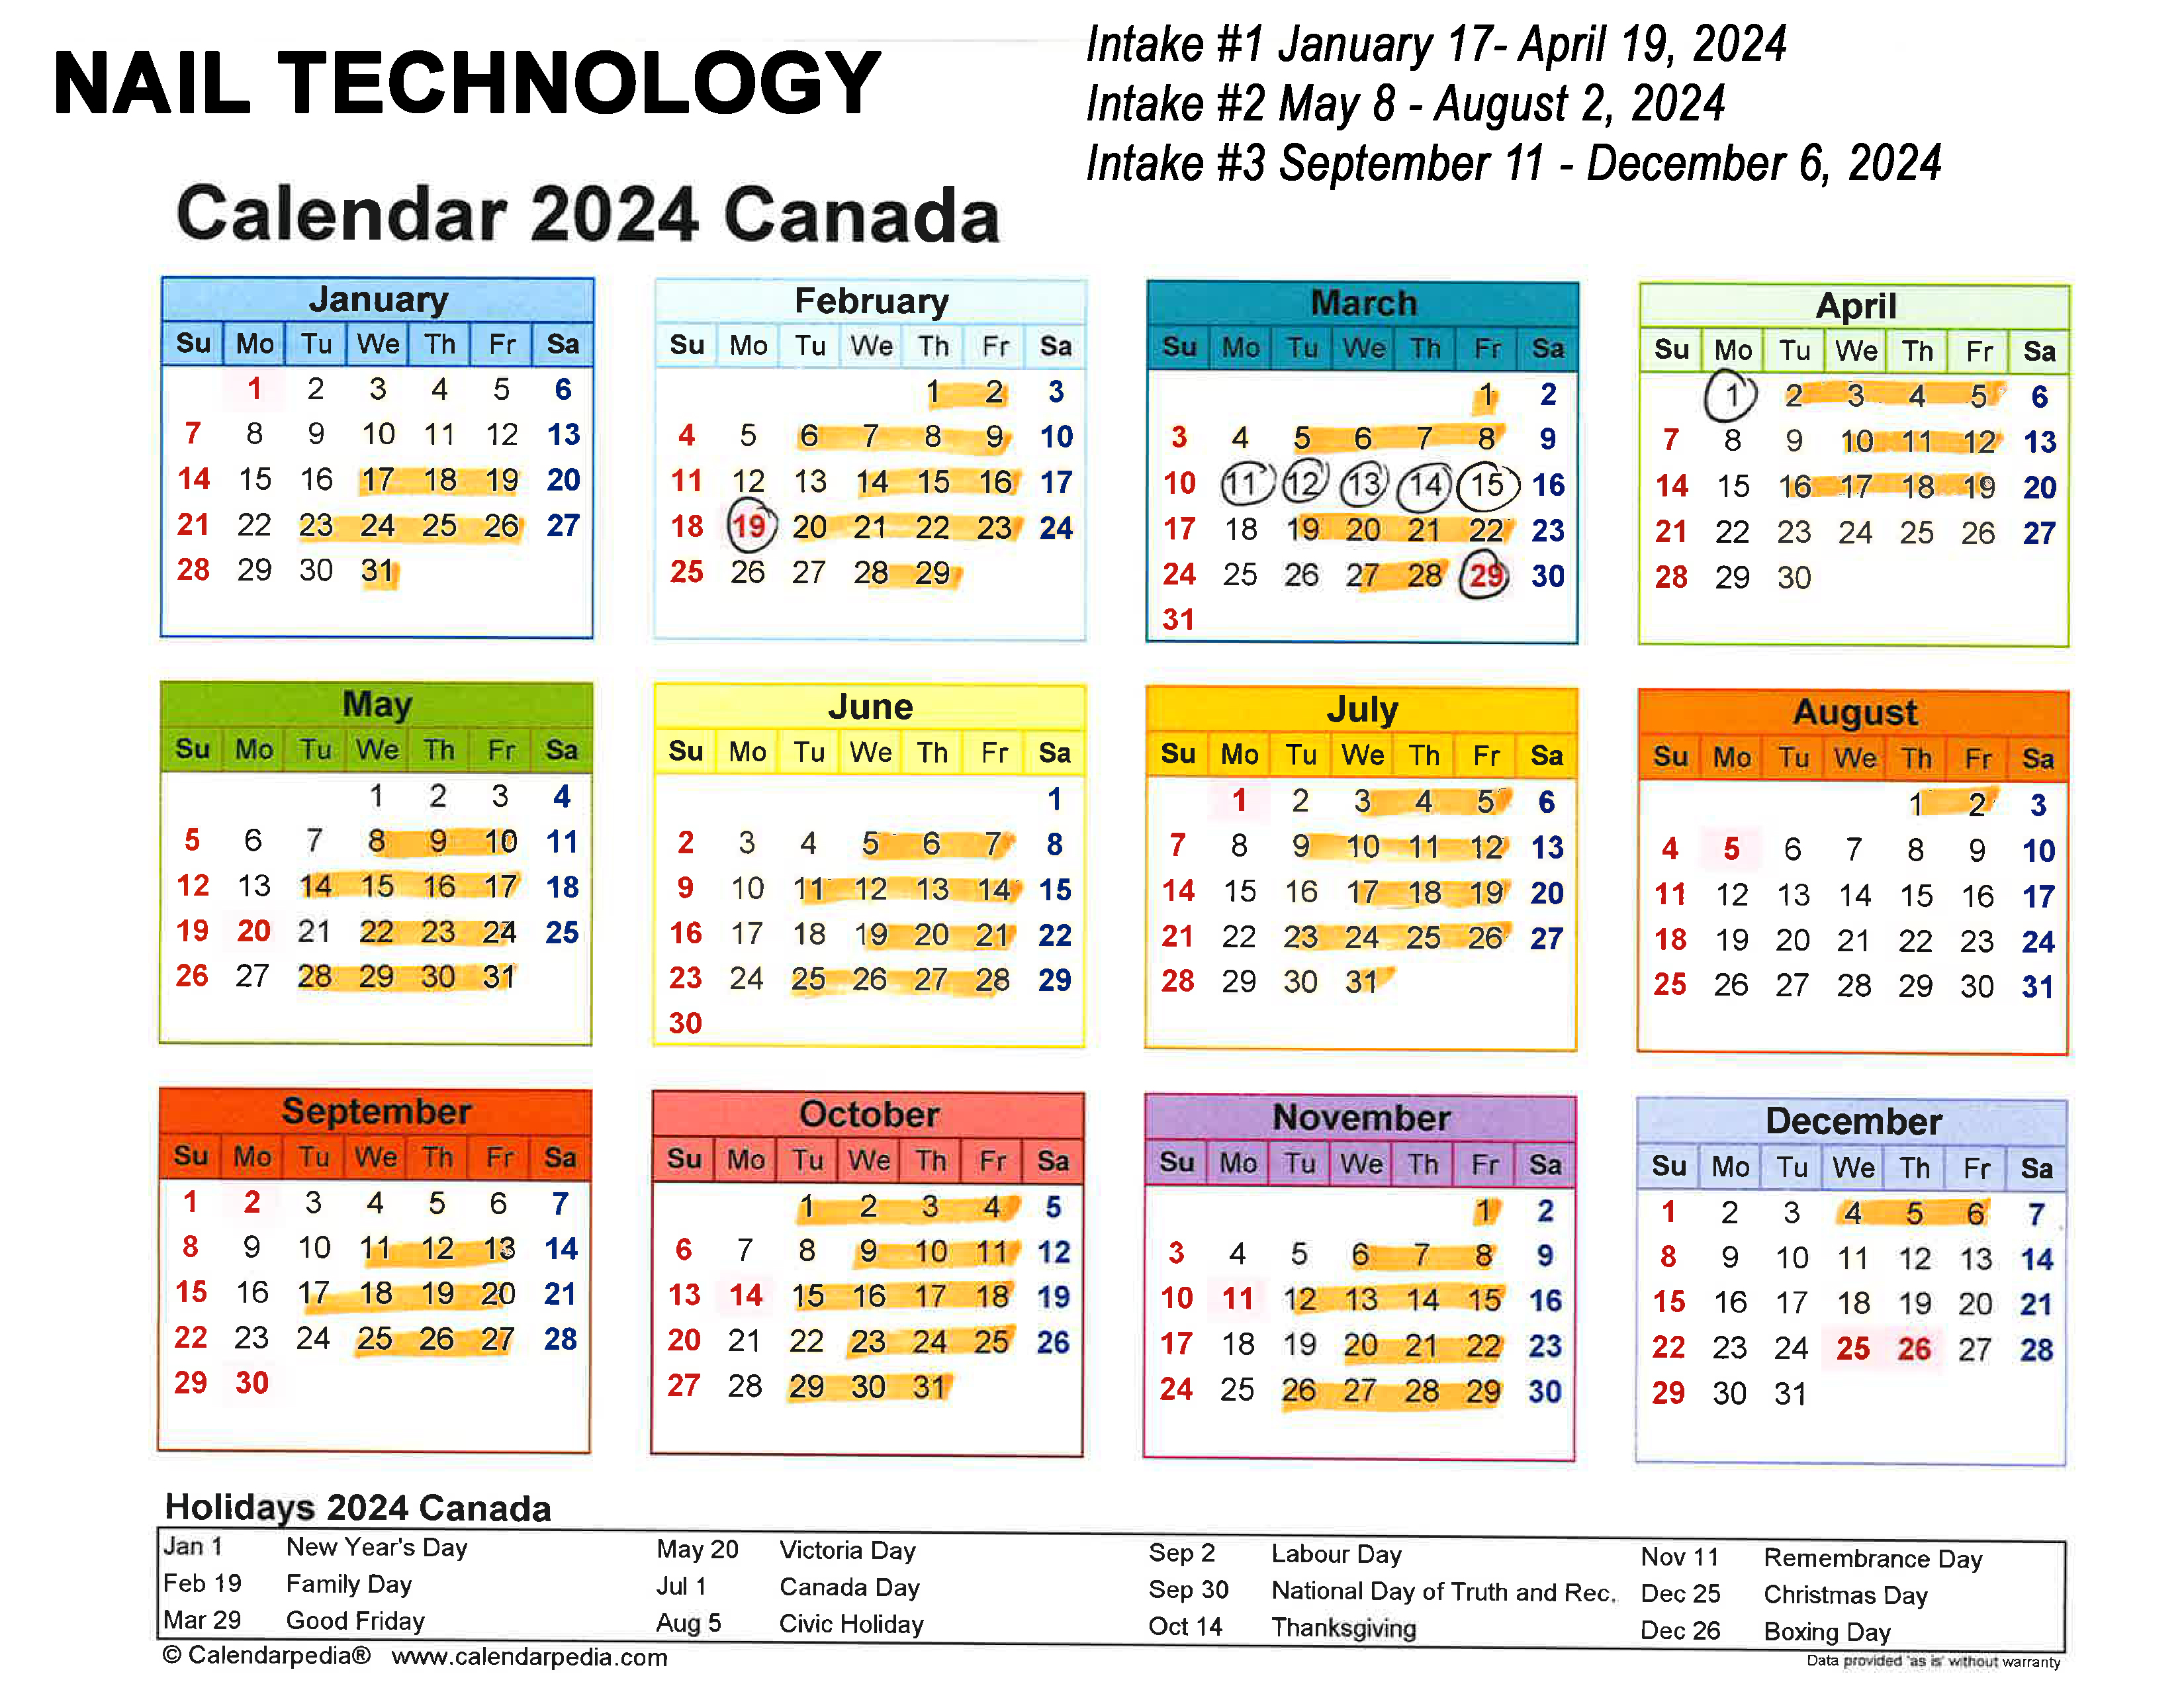 2024 nail tech calendar